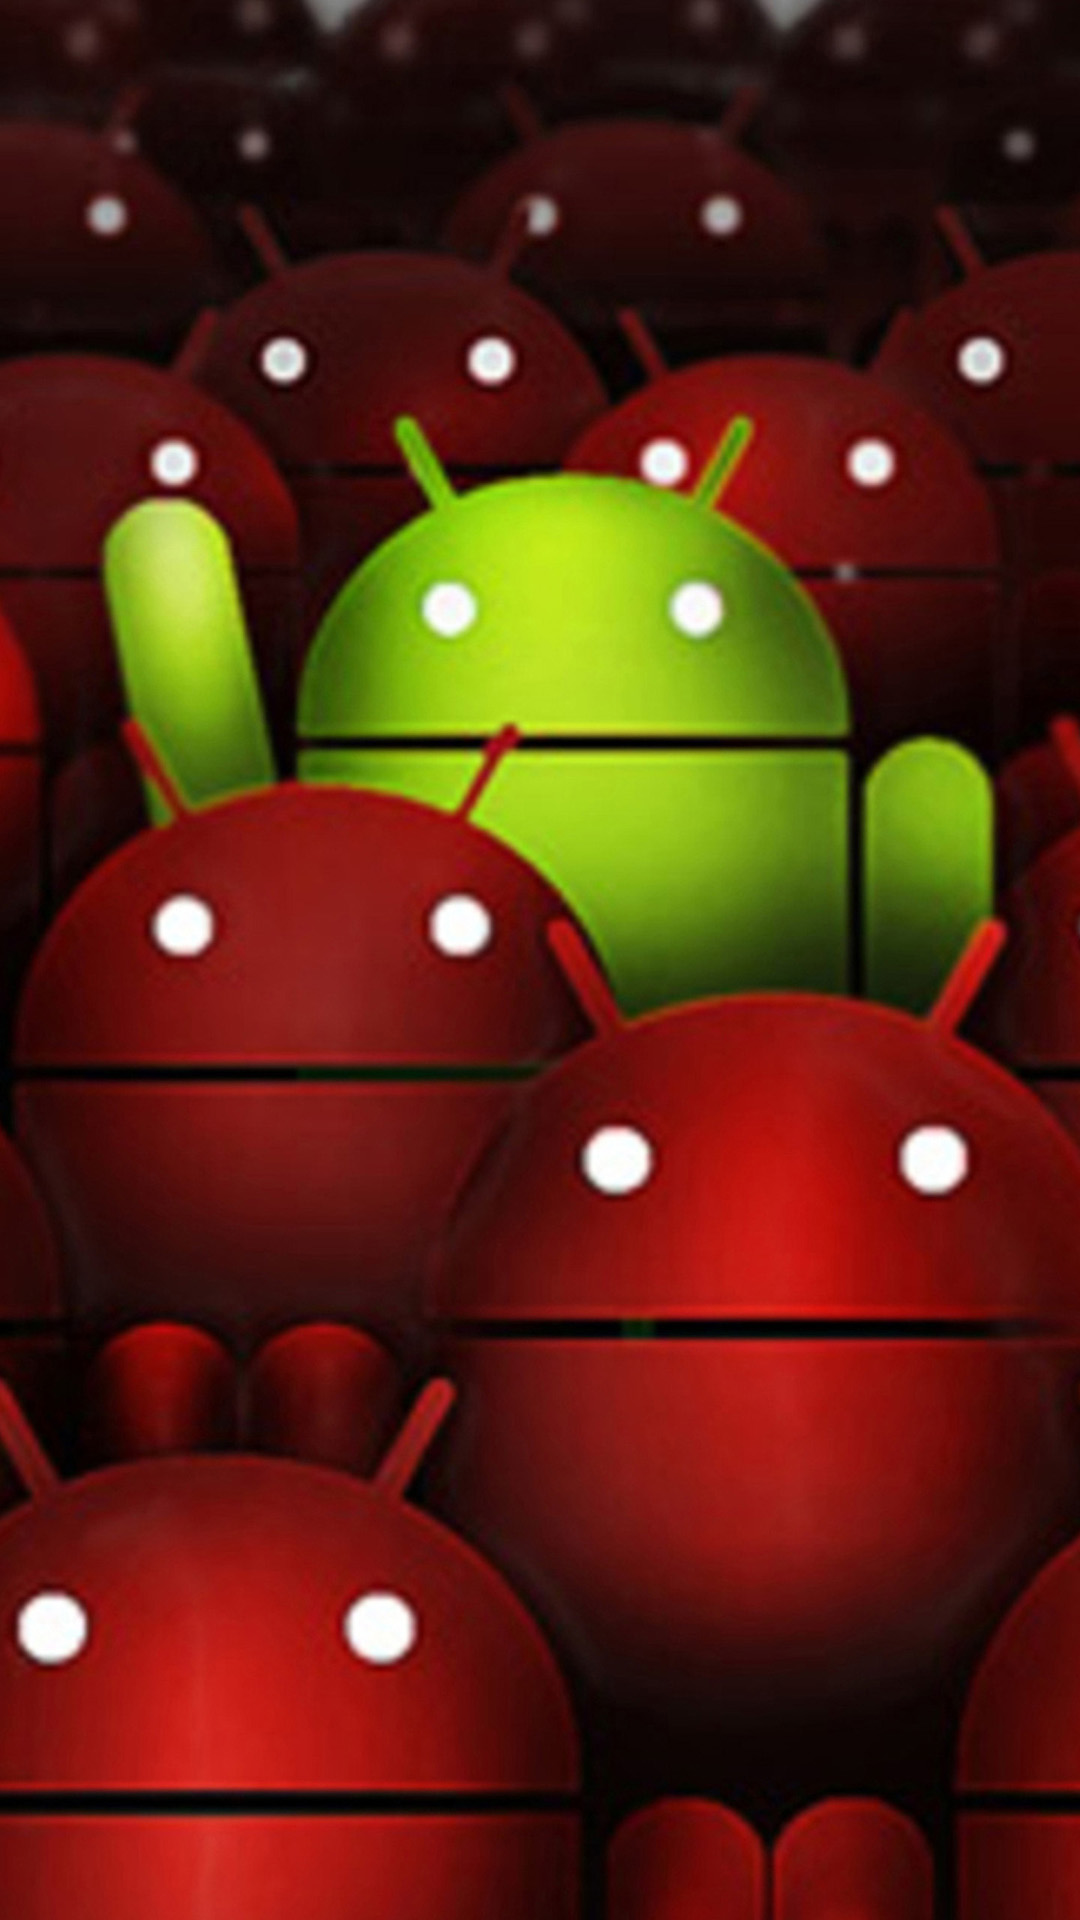 Free Download 3D Background for Android | PixelsTalk.Net